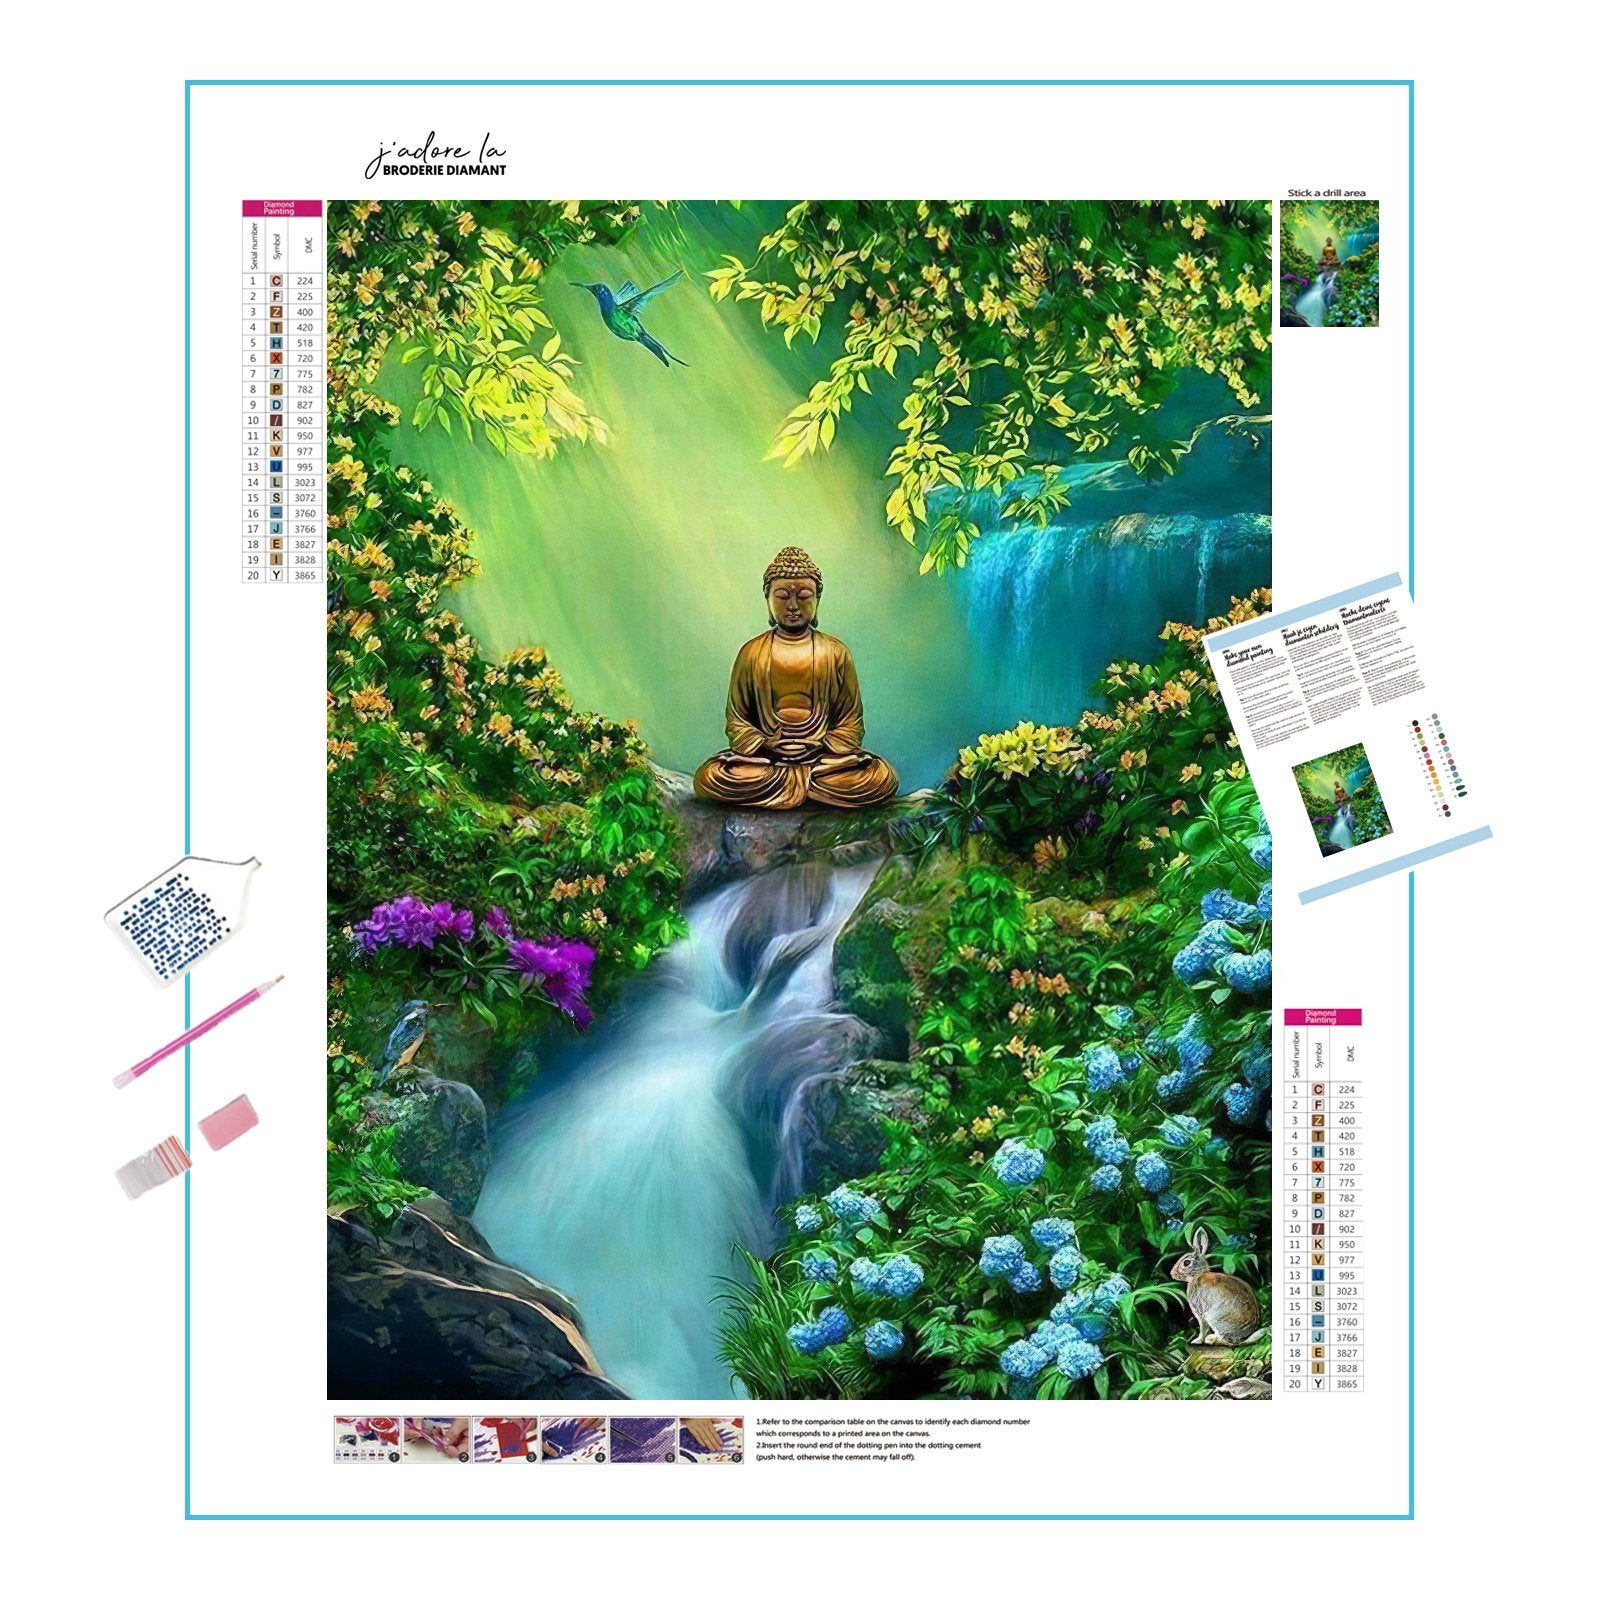 Buddha against a backdrop of waterfalls and mountains, representing tranquility.Buddha Waterfall Mountain - Diamondartlove